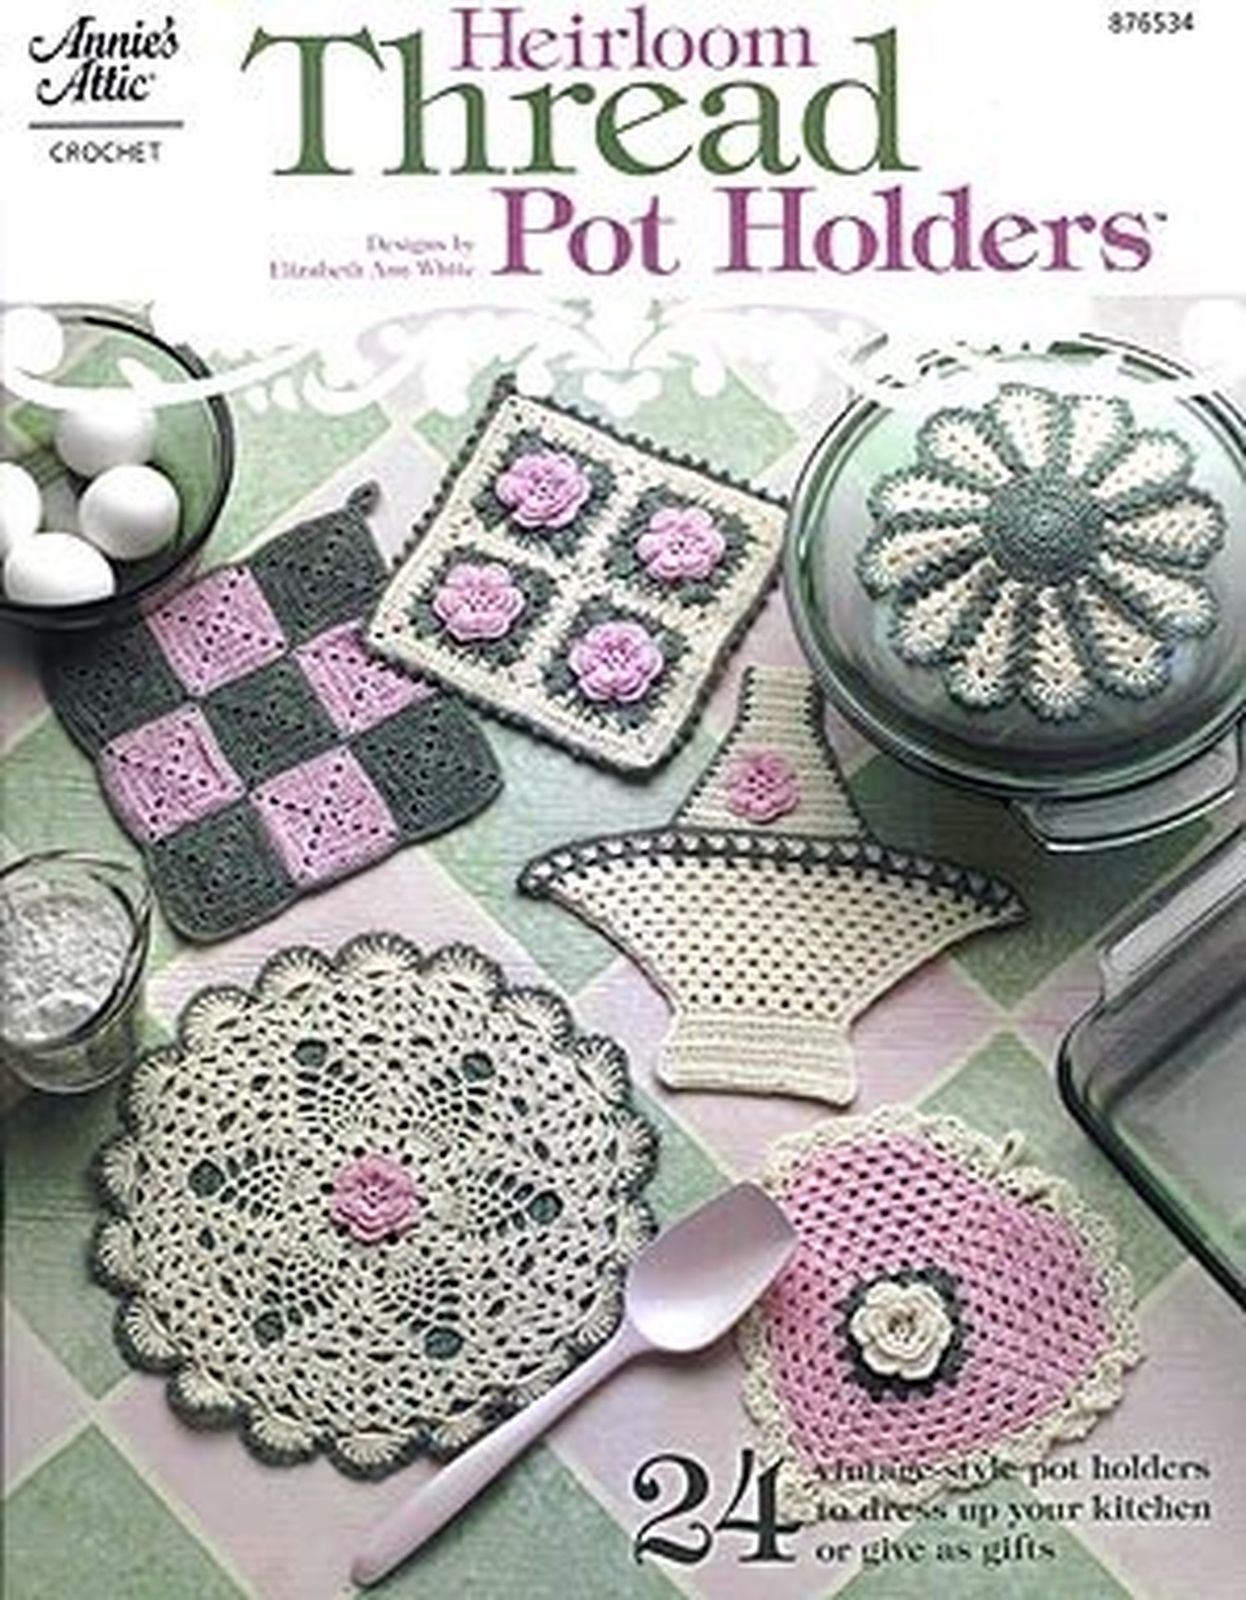 Heirloom Thread Pot Holders VTG Crochet Patterns Old Fashioned Style - $47.20